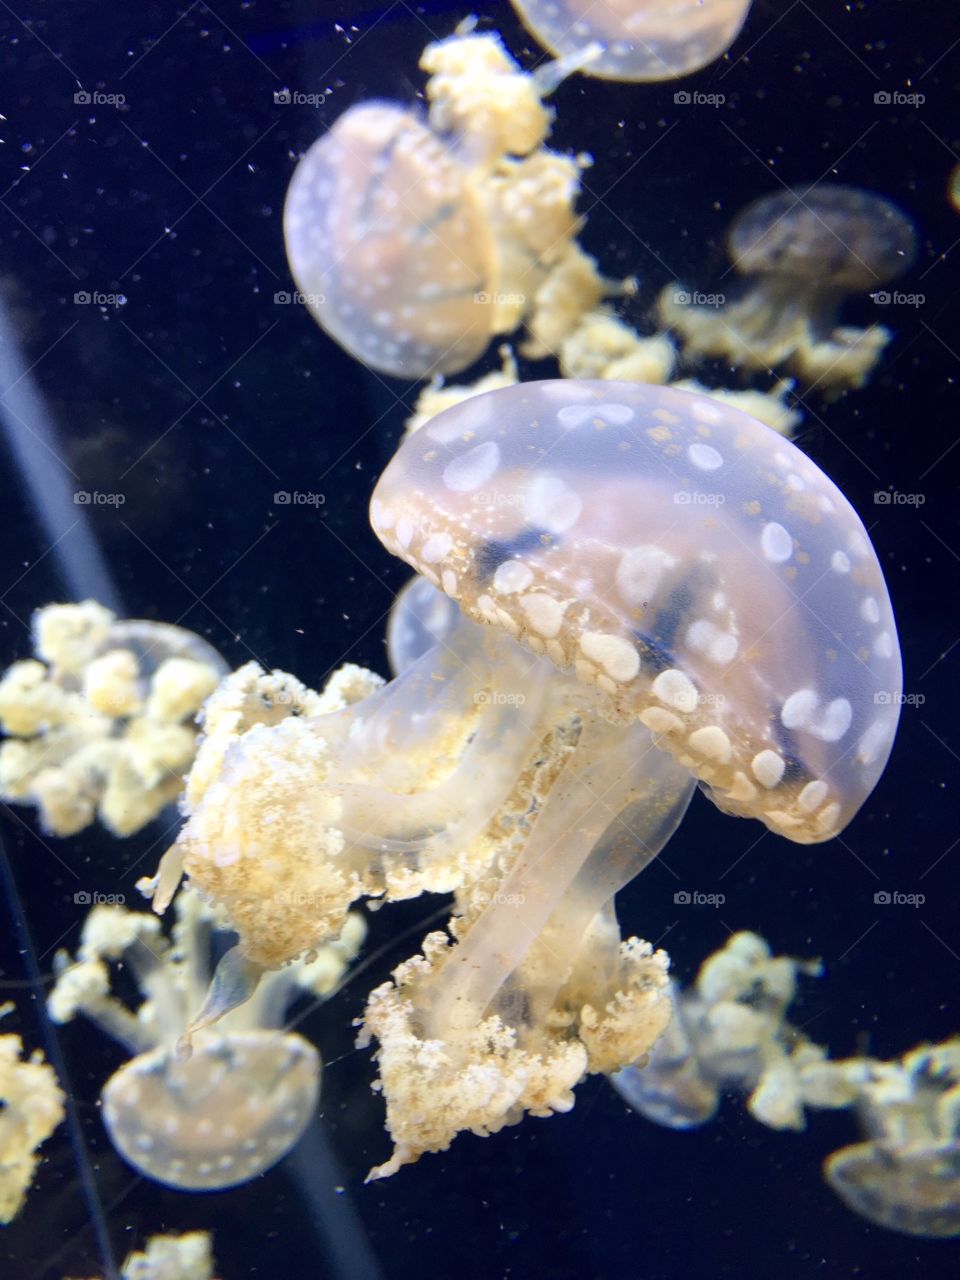 Jellyfish at the Baltimore Aquarium in Maryland